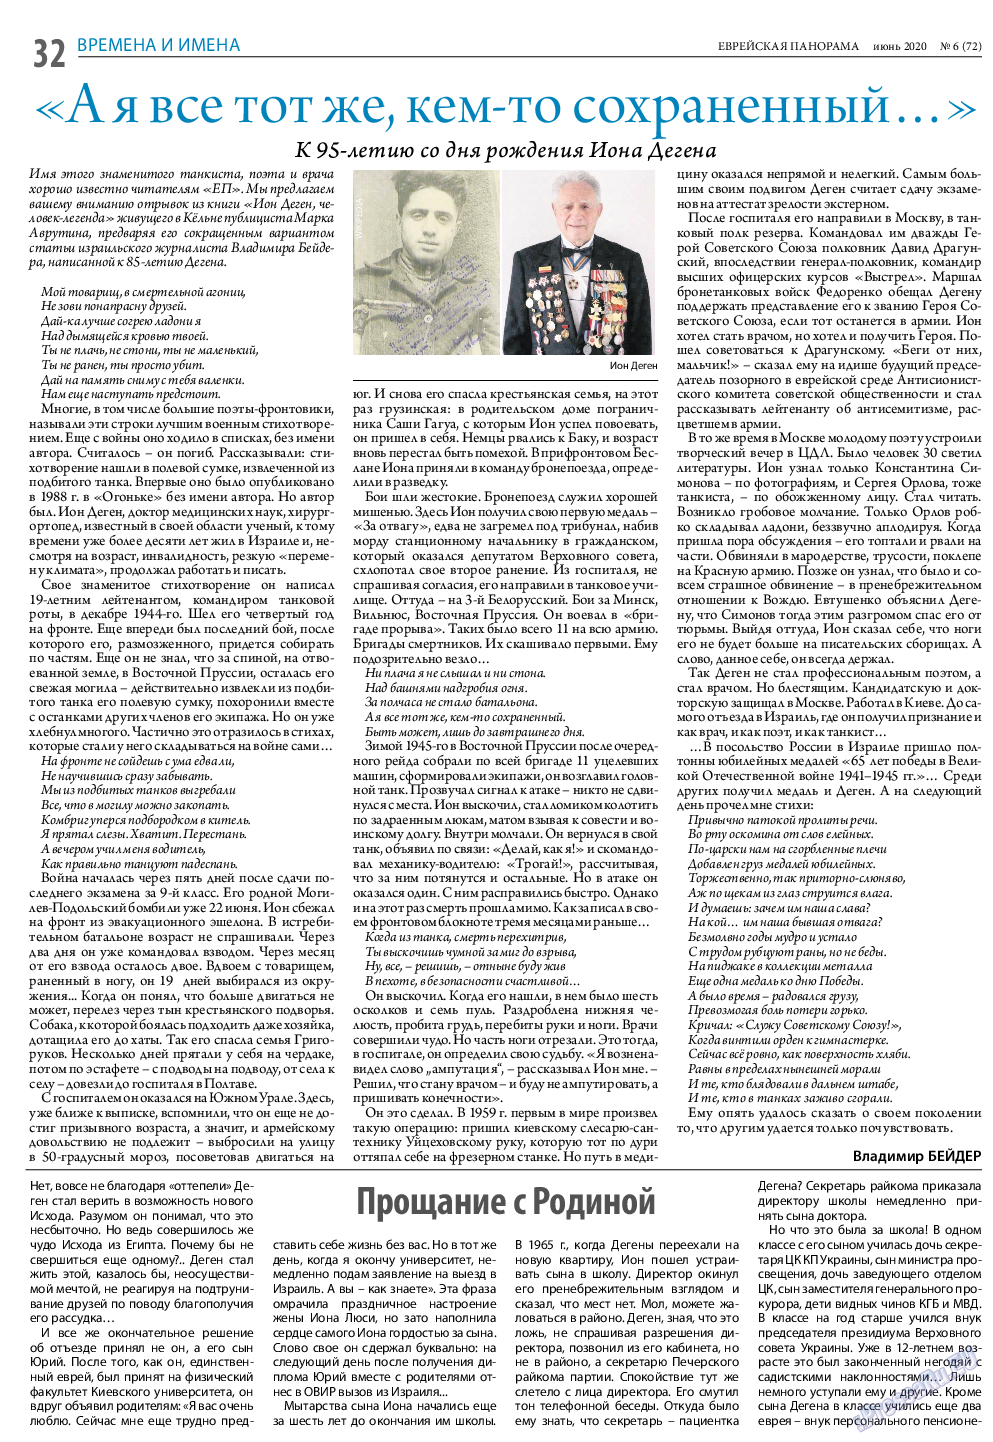 Еврейская панорама, газета. 2020 №6 стр.32